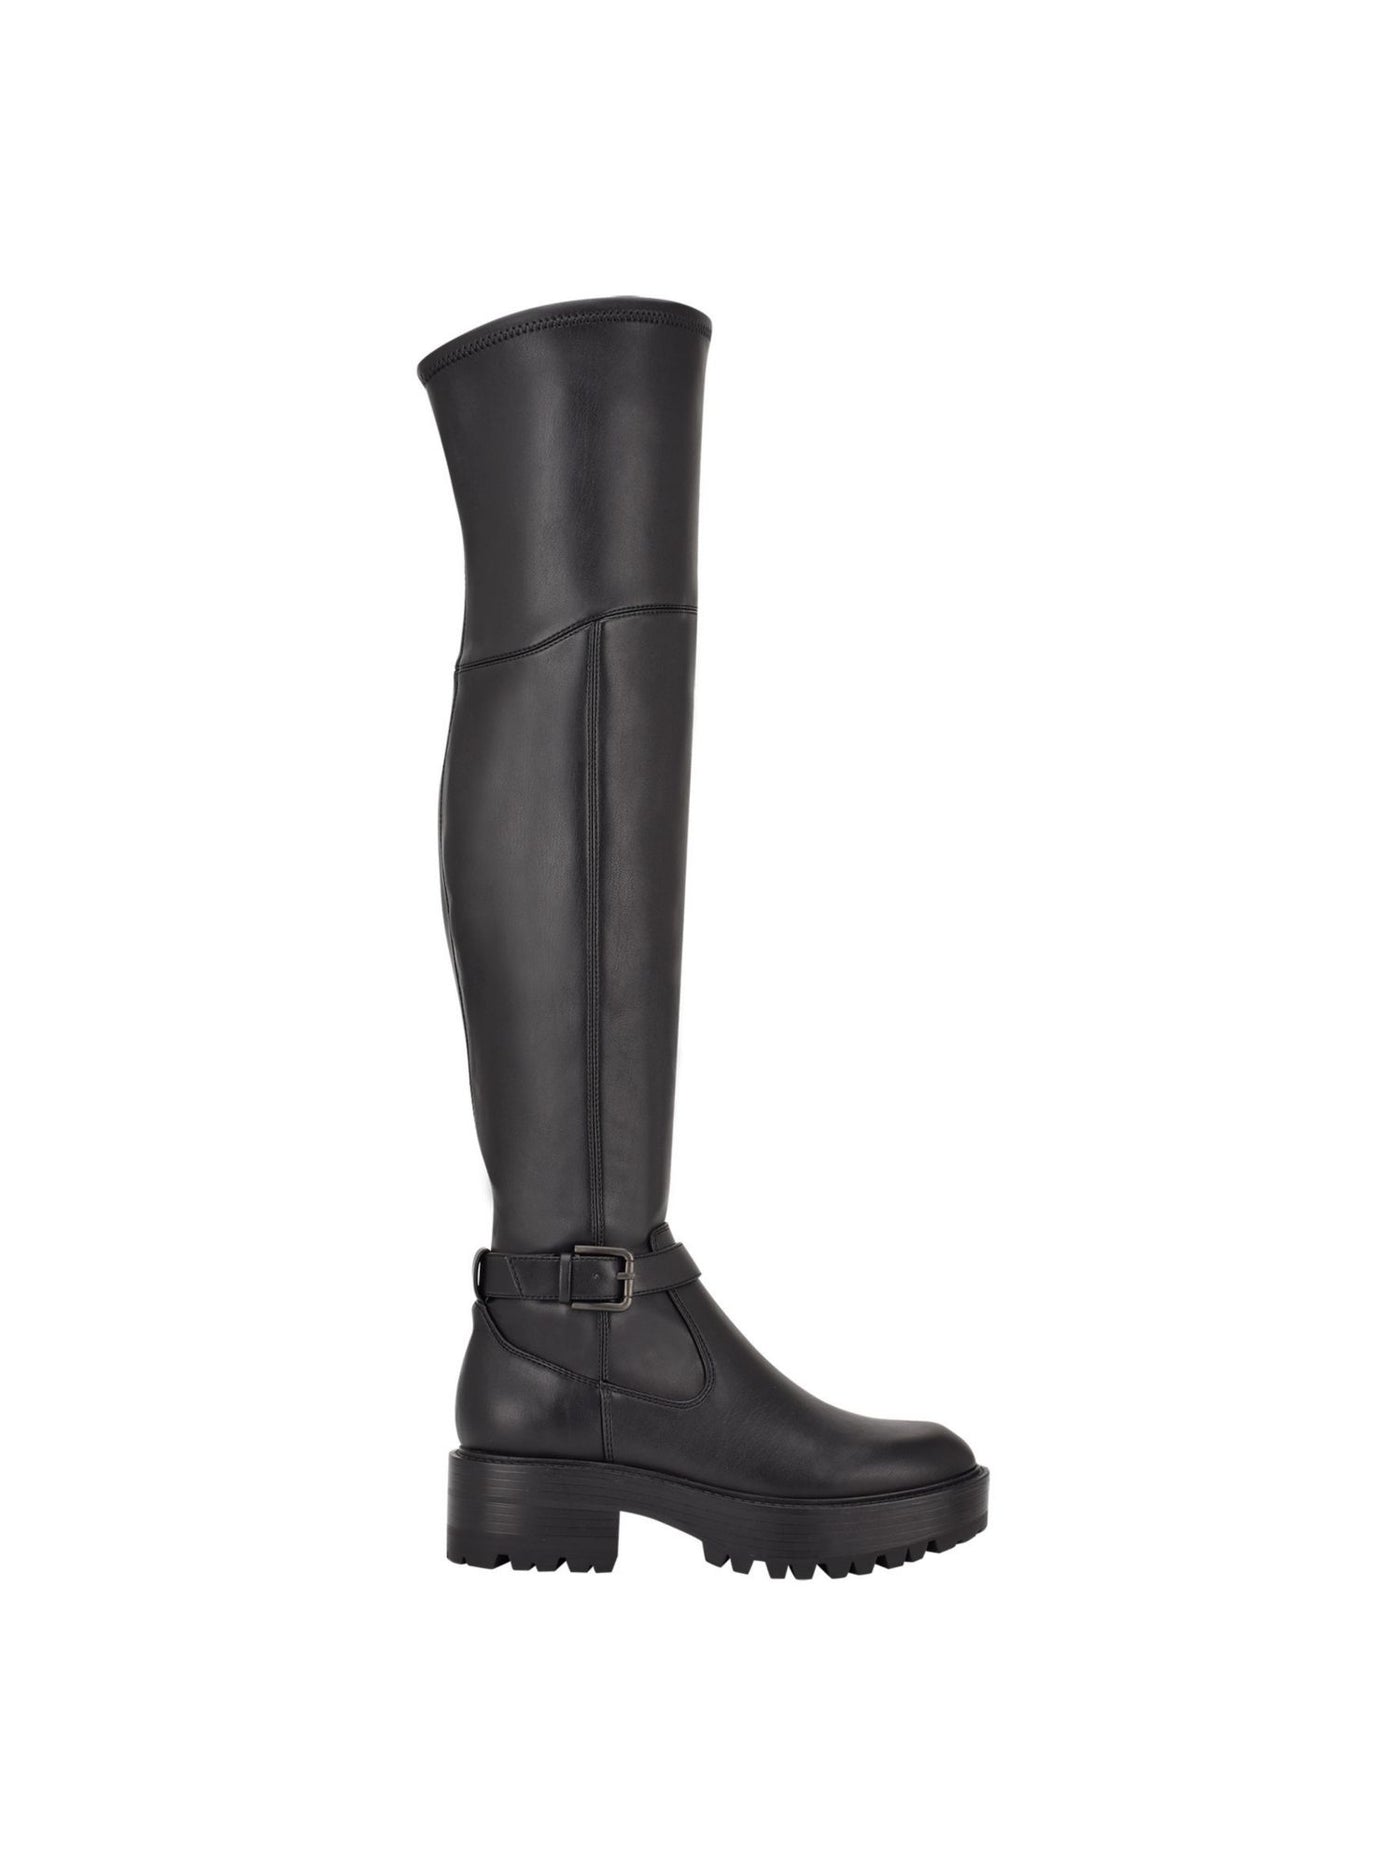 GUESS Womens Black 1" Platform Lug Sole Buckle Accent Frazer Round Toe Block Heel Zip-Up Boots Shoes 8.5 M